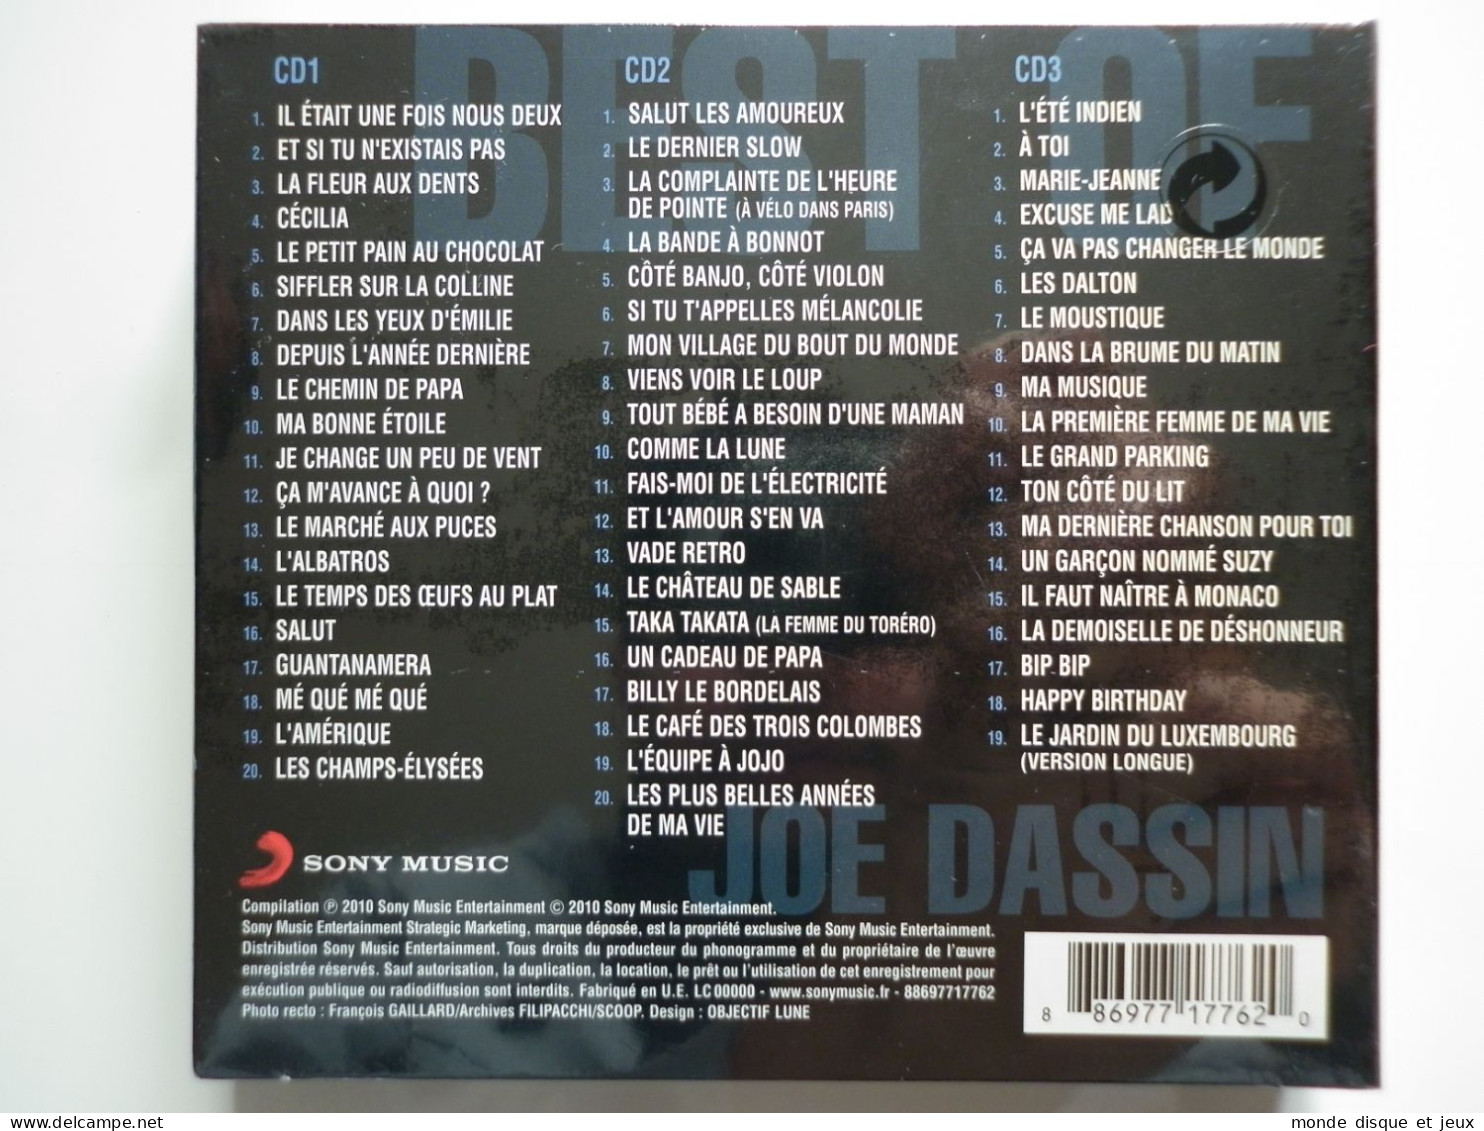 Joe Dassin Triple Cd Album Digipack L'Album Souvenir - Andere - Franstalig